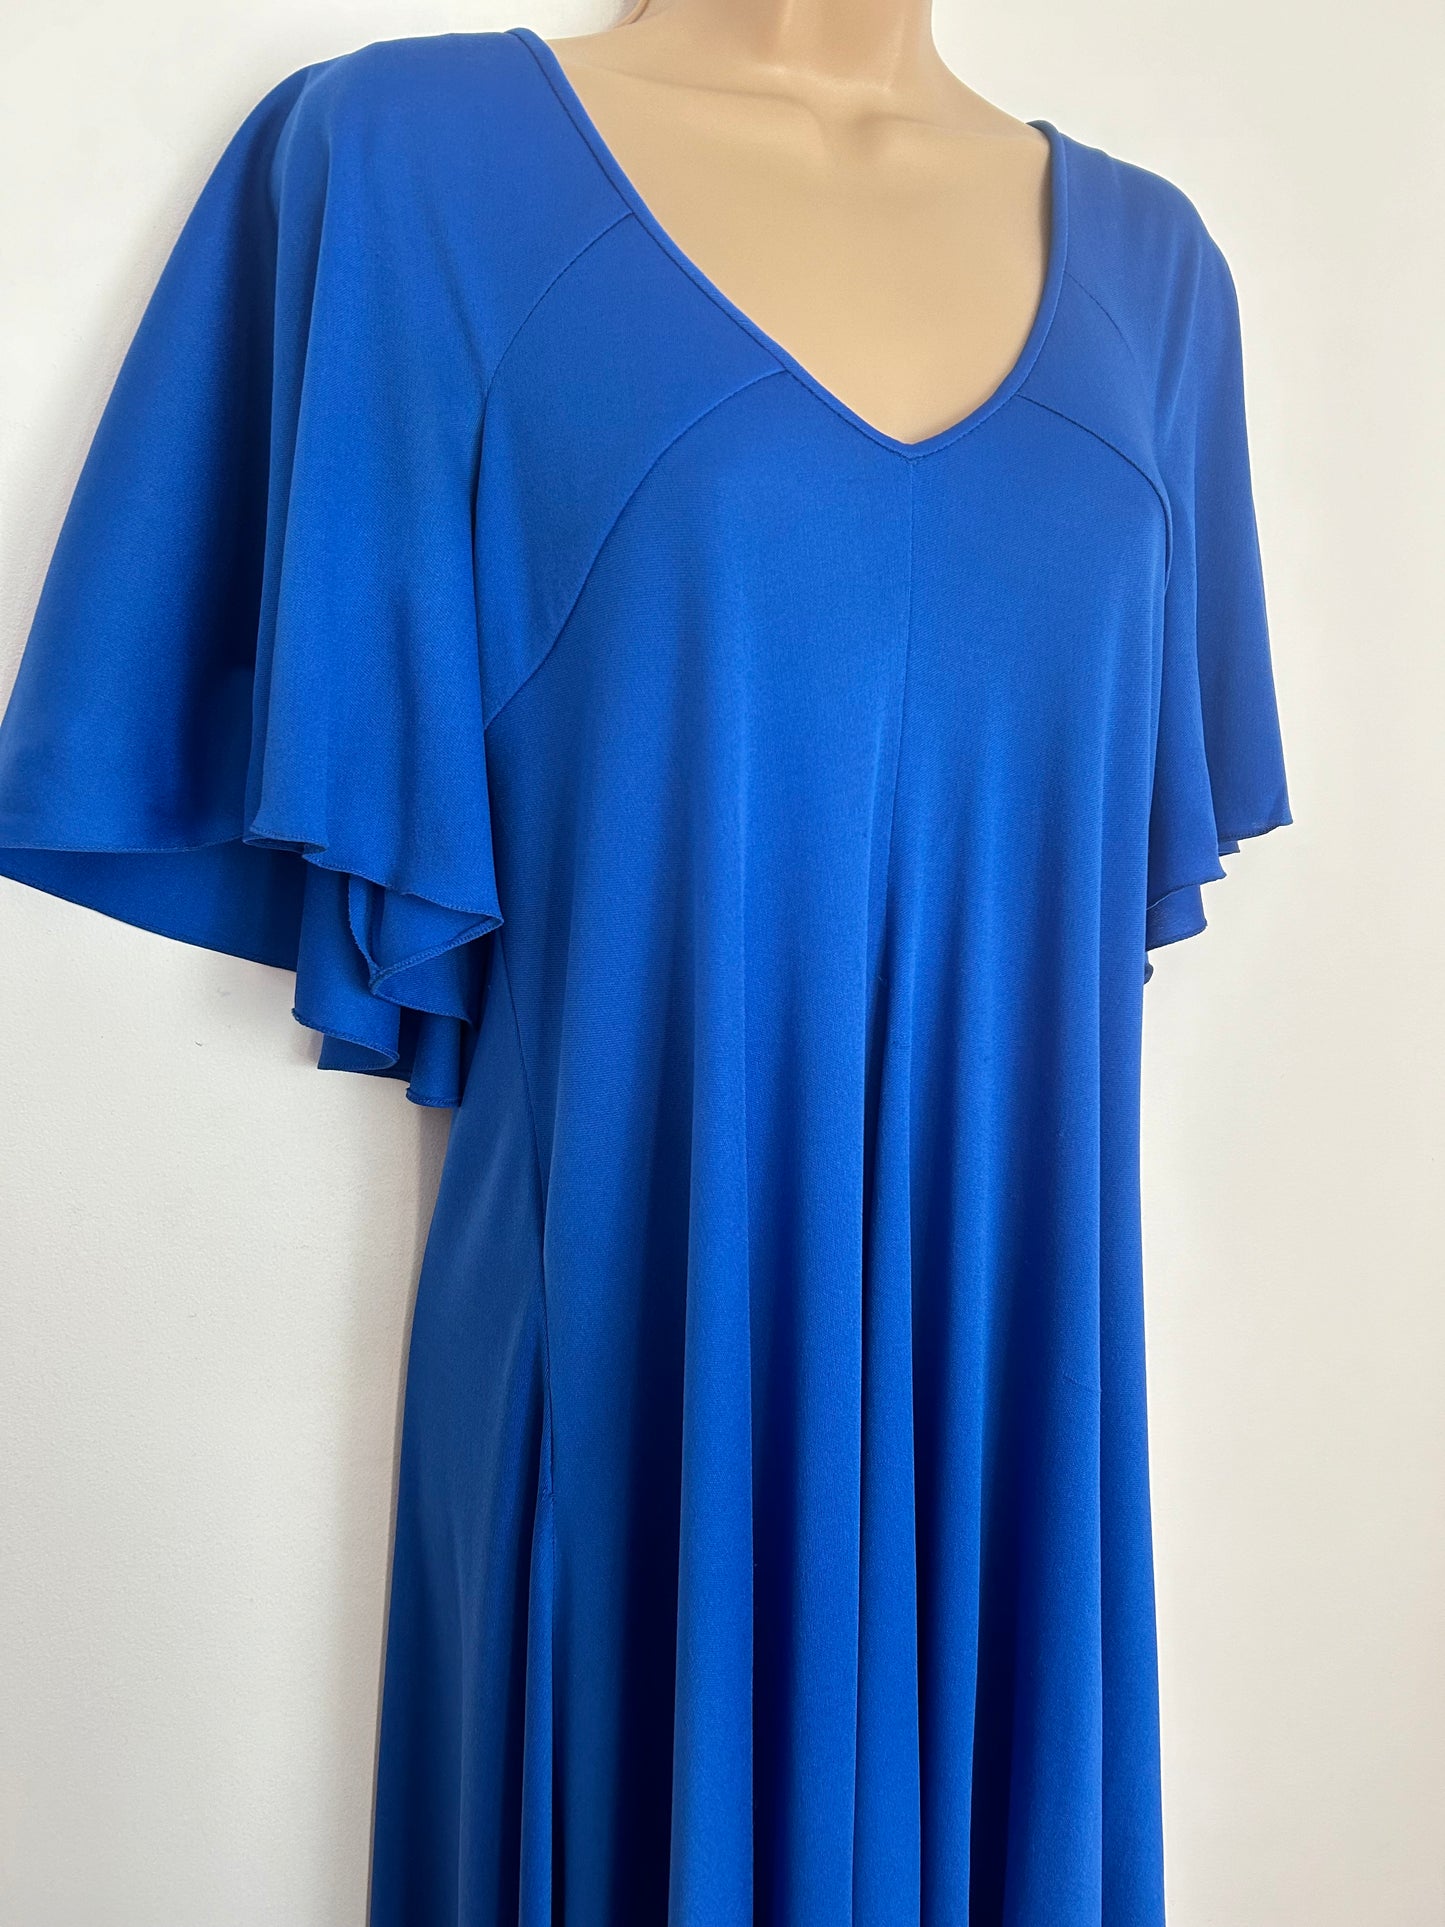 Vintage Early 1970s FRANK USHER UK Size 10 Cobalt Blue Crimplene Short Flared Sleeve Maxi Dress